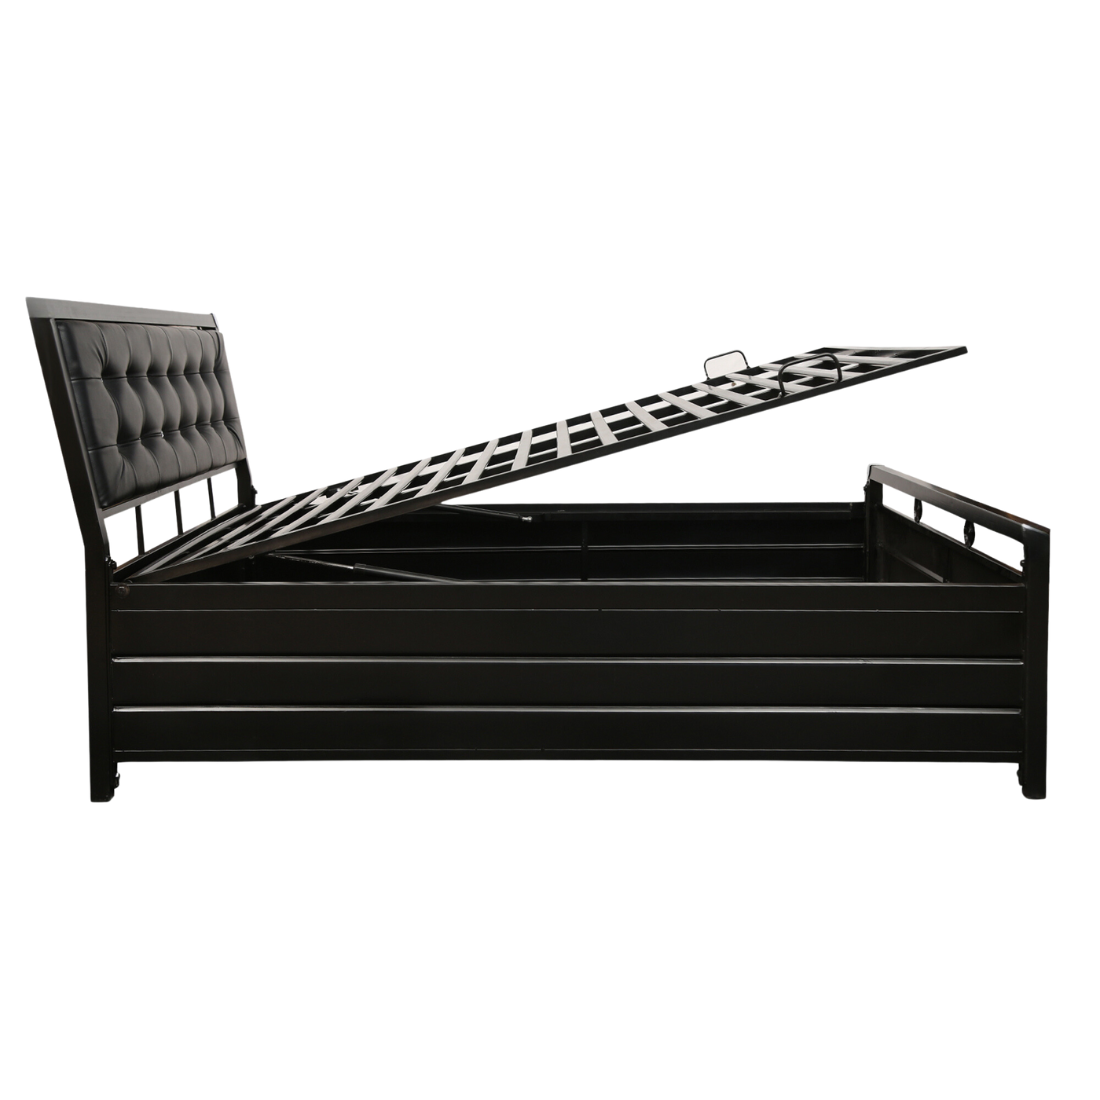 Heath Hydraulic Storage Double Metal Bed with Black Cushion Headrest (Color - Black)